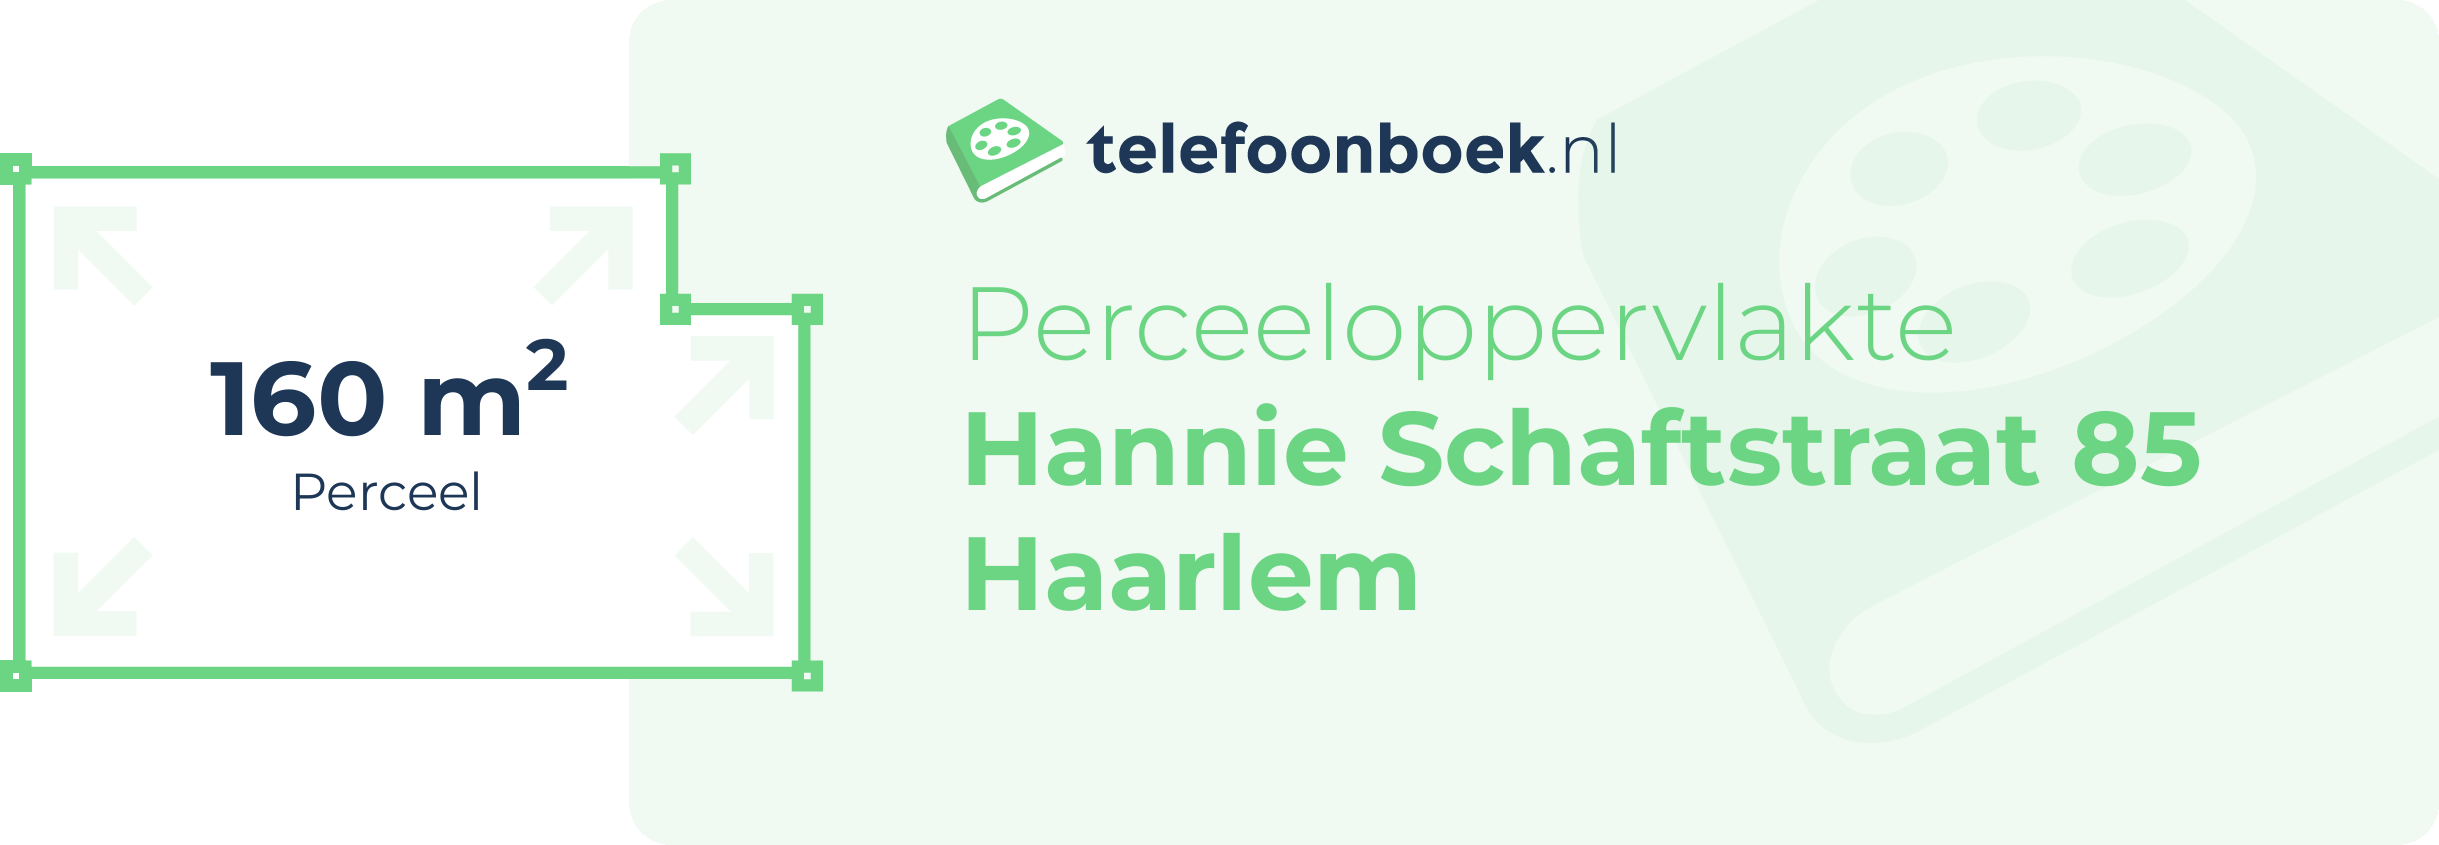 Perceeloppervlakte Hannie Schaftstraat 85 Haarlem